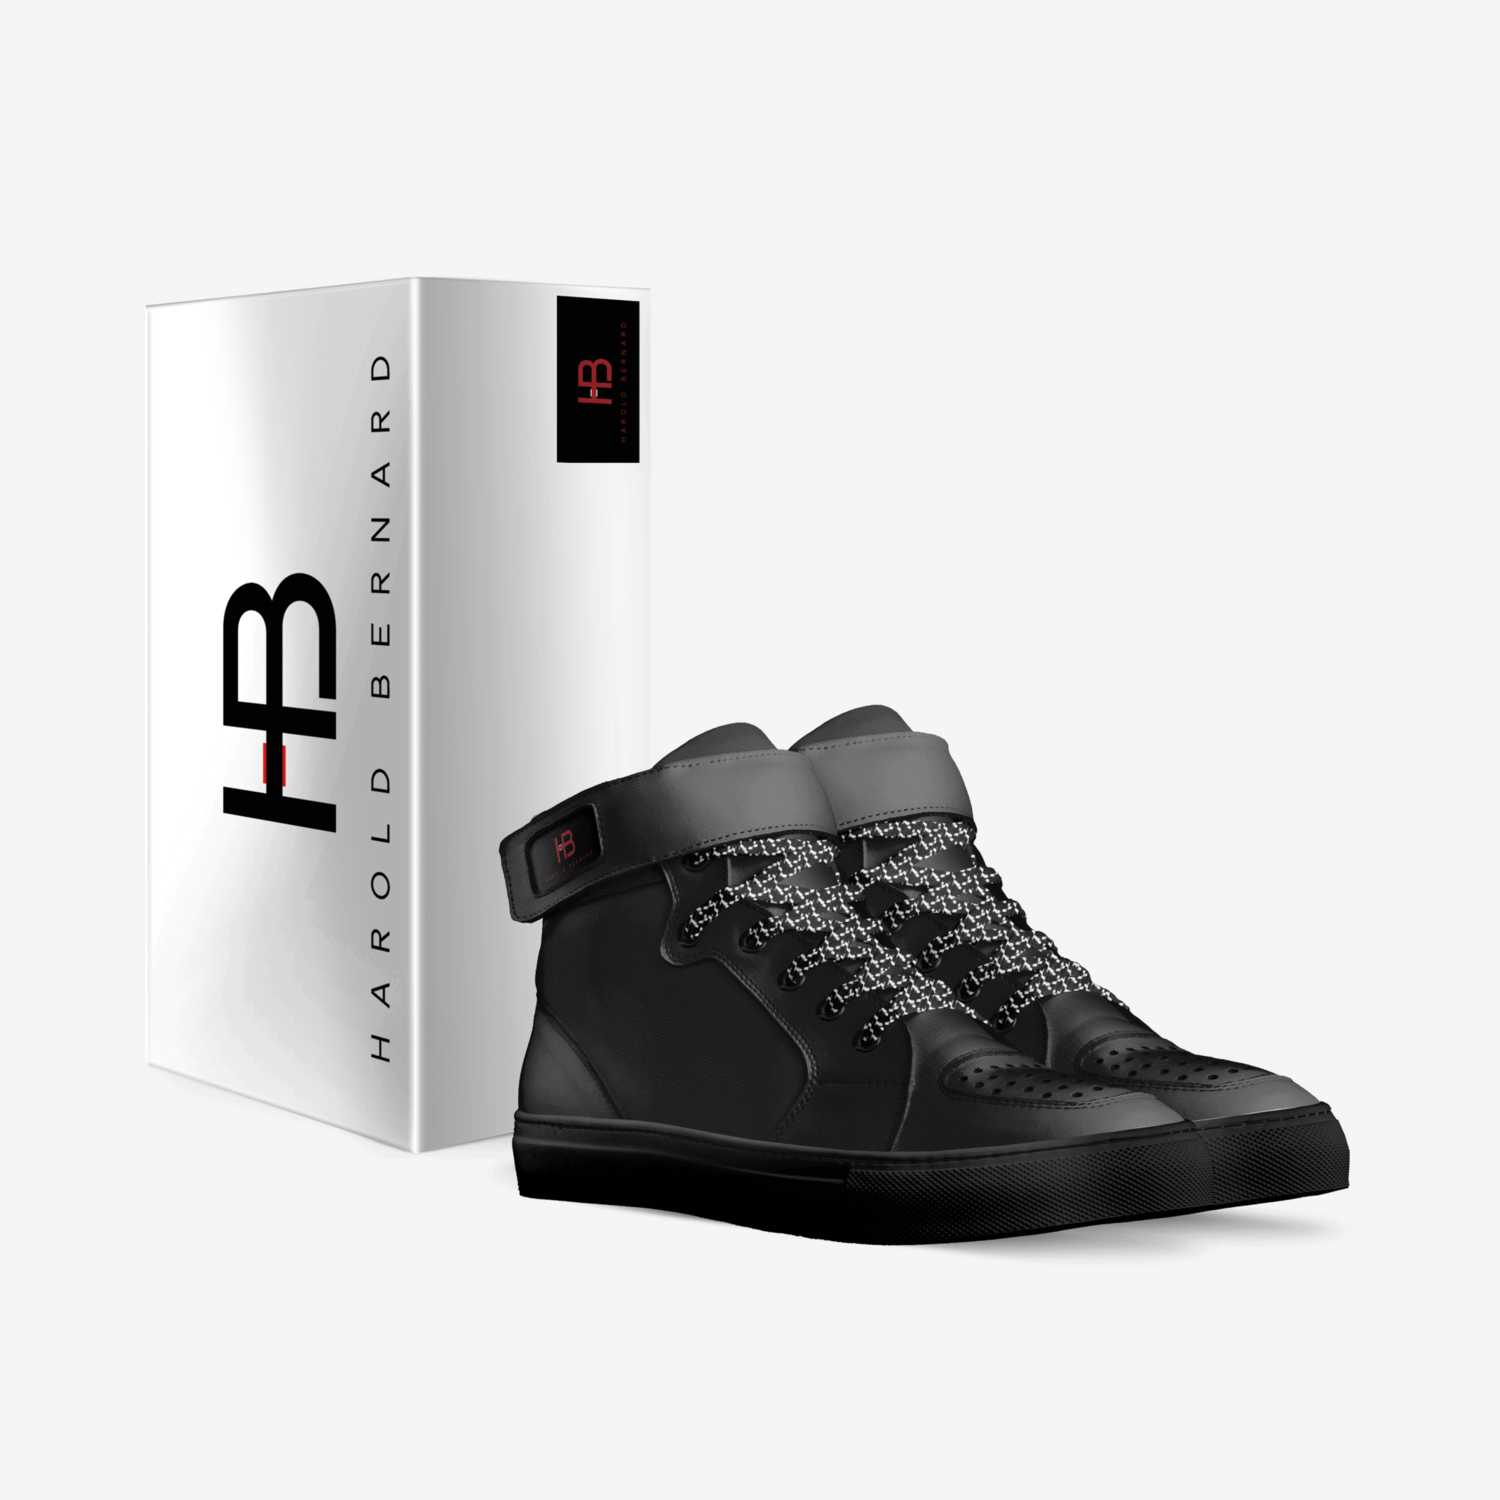 Mansa (black) custom made in Italy shoes by Nikki Makk | Box view